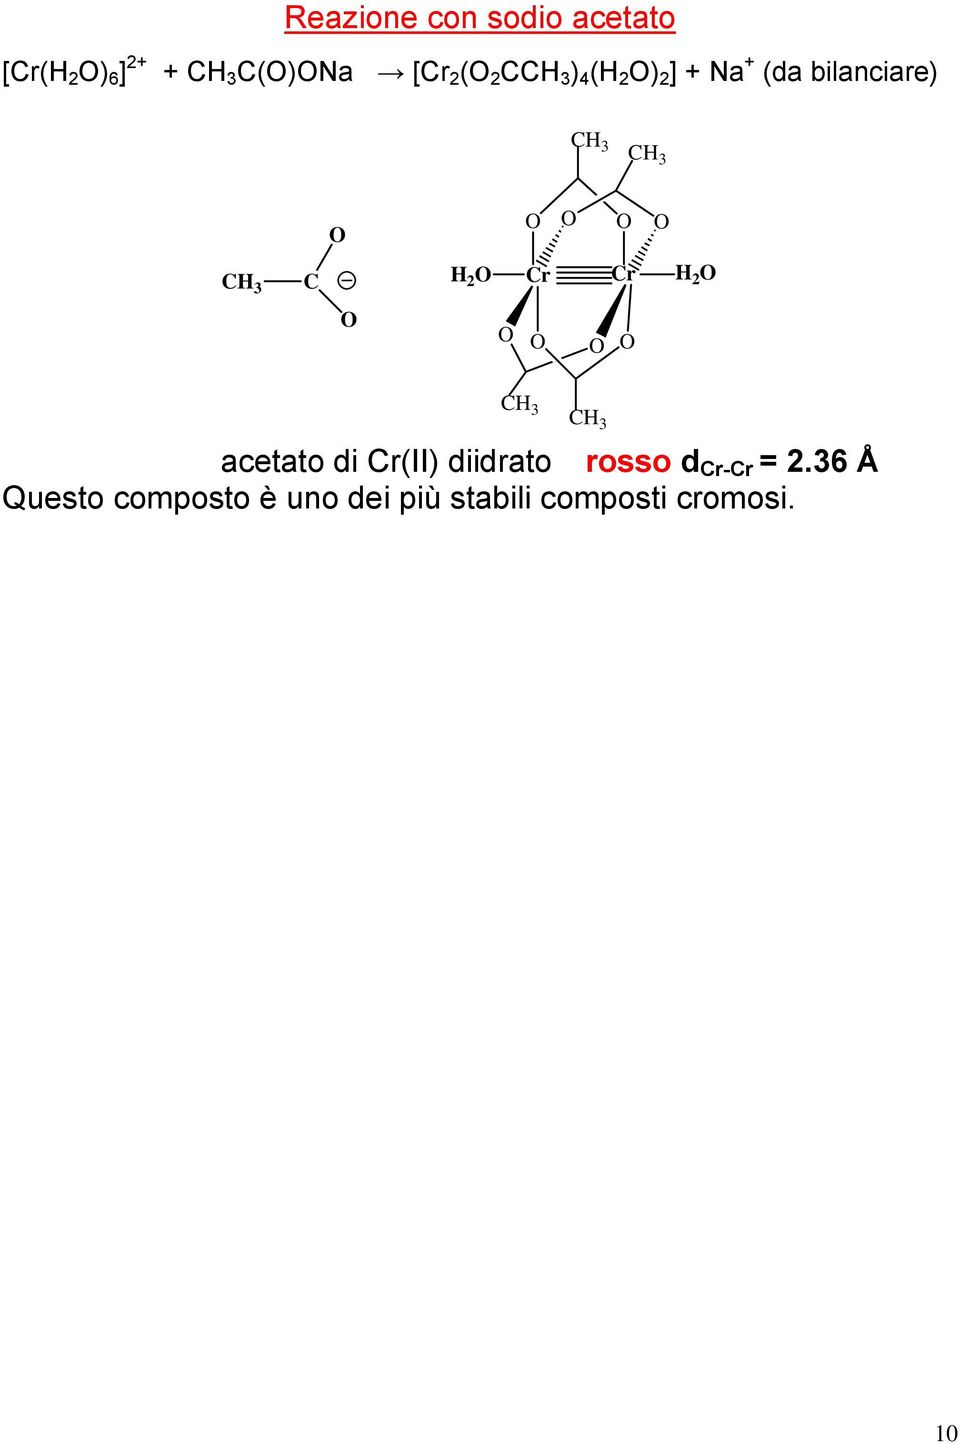 2 2 C 3 C 3 acetato di (II) diidrato rosso d - = 2.